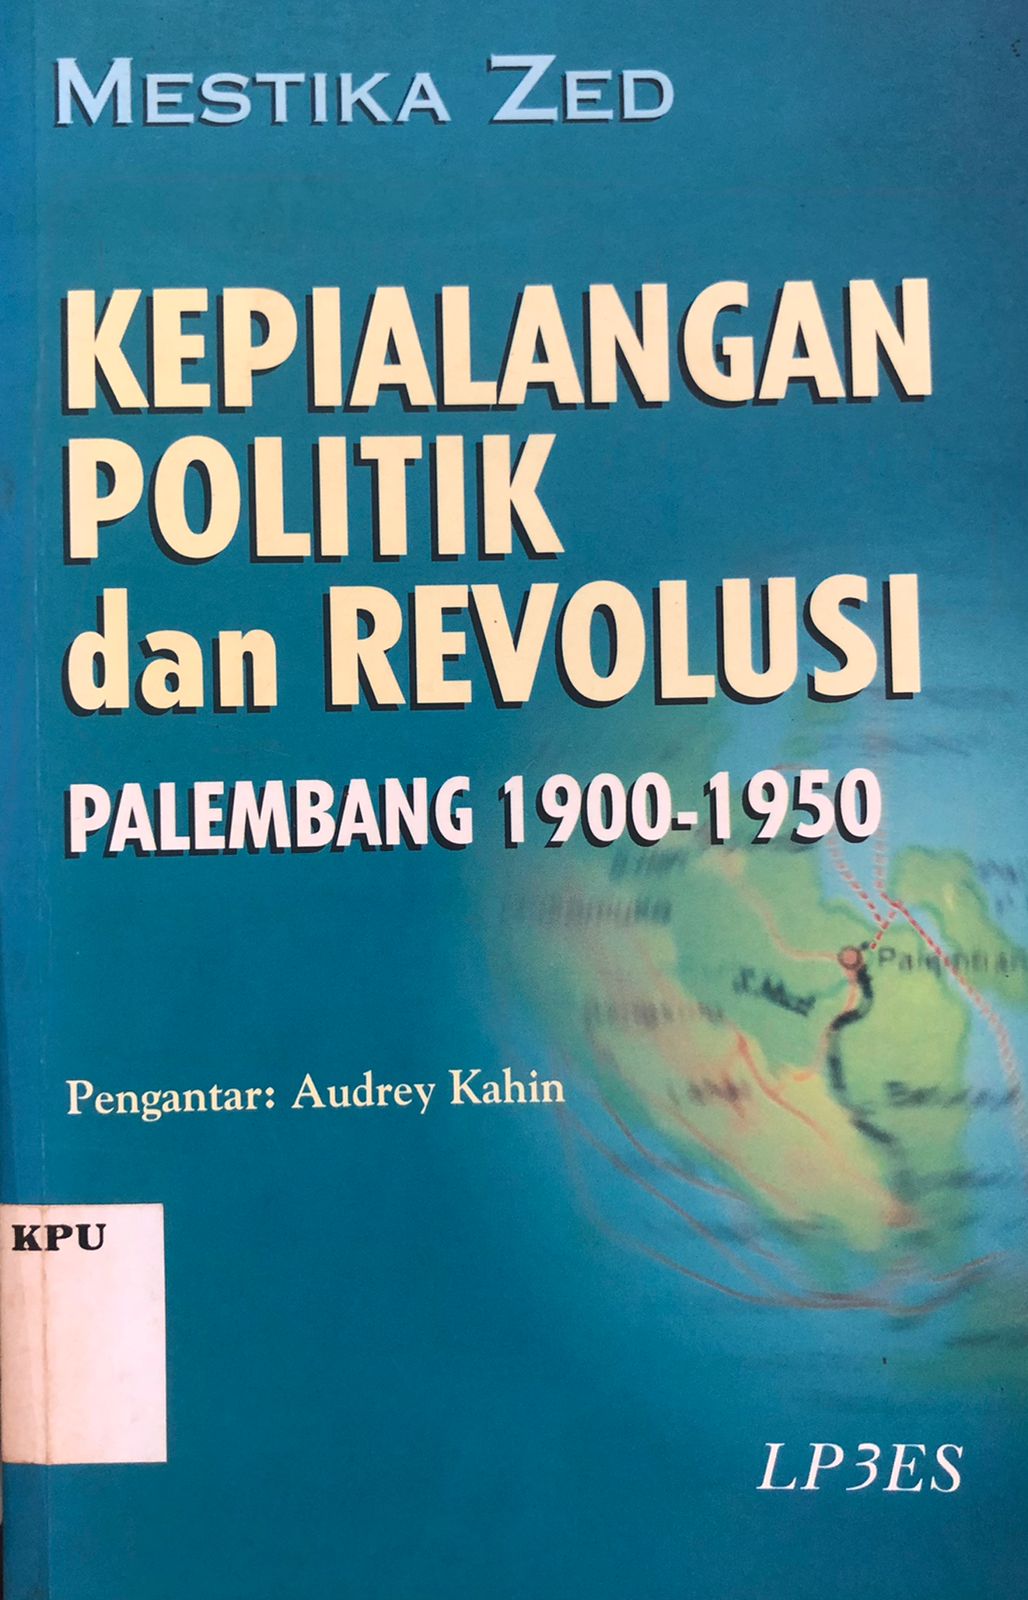 Kepialangan Politik dan Revolusi Palembang 1900-1950